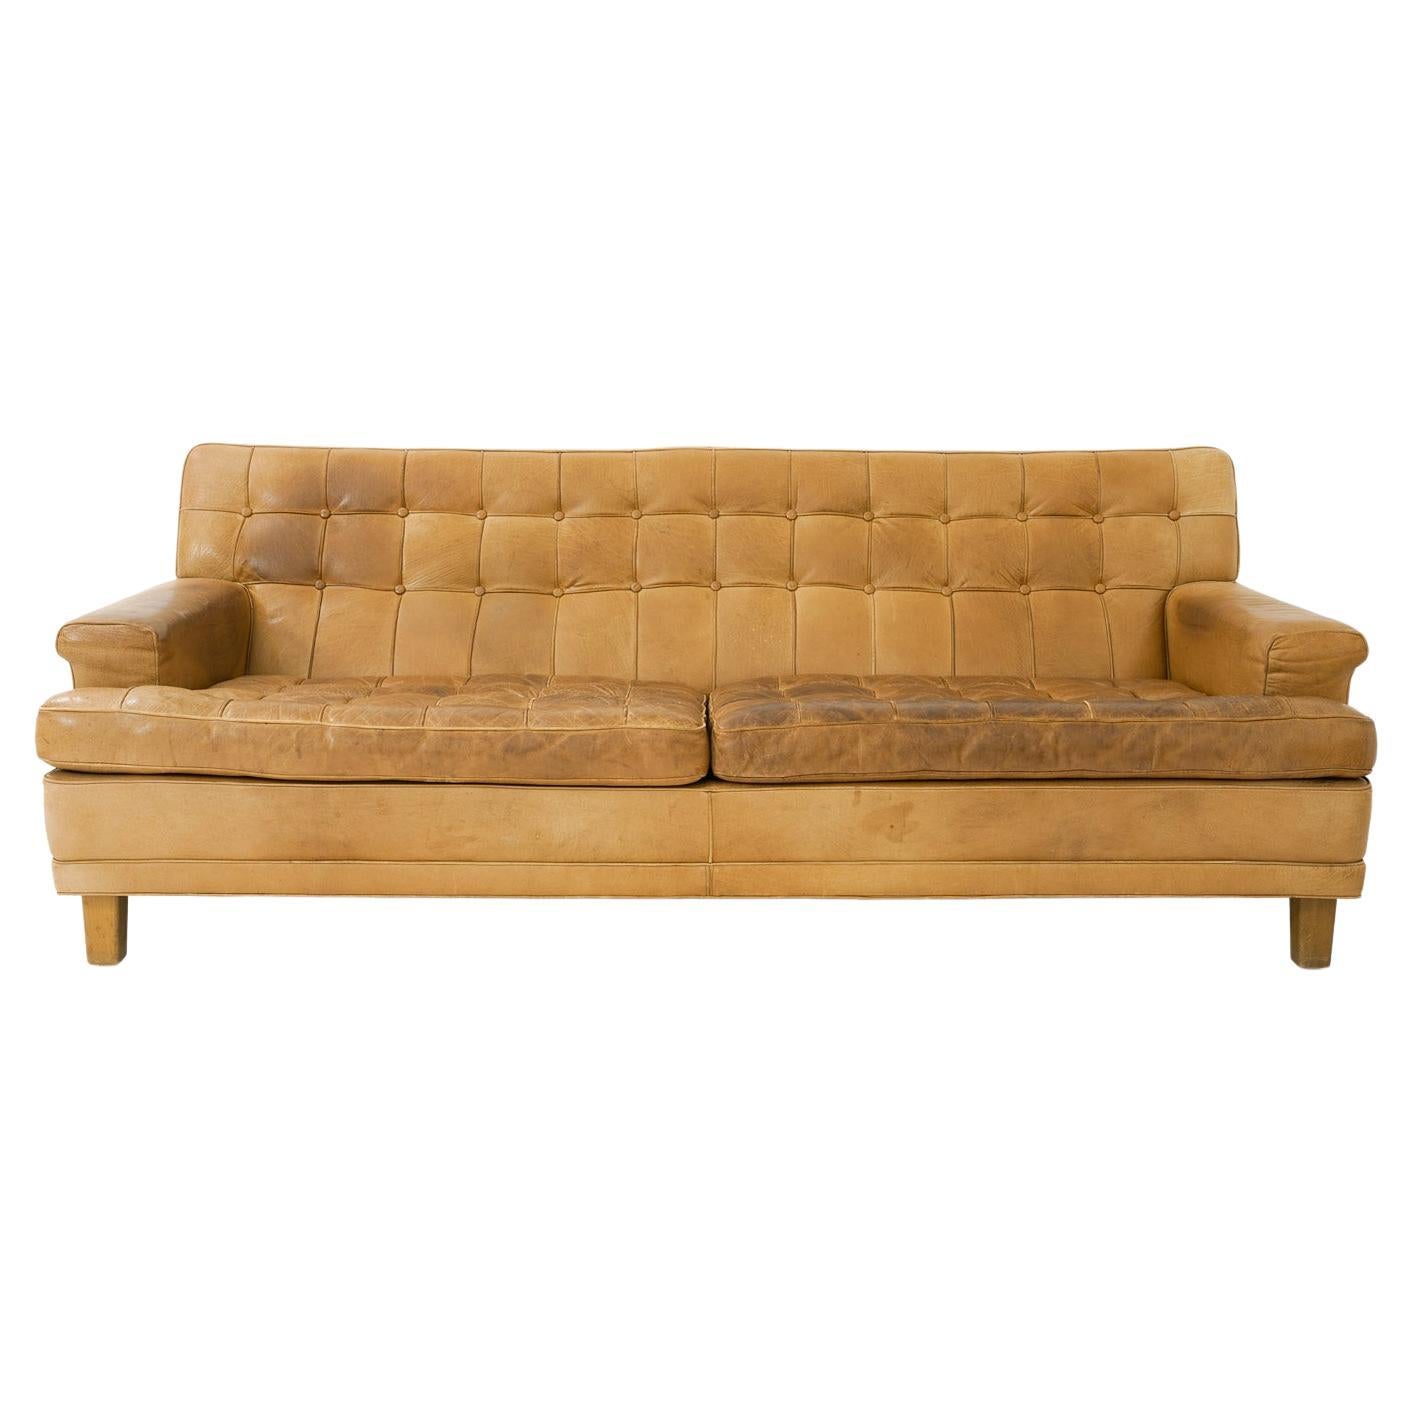 Midcentury Swedish Sofa "Merkur" by Arne Norell For Sale